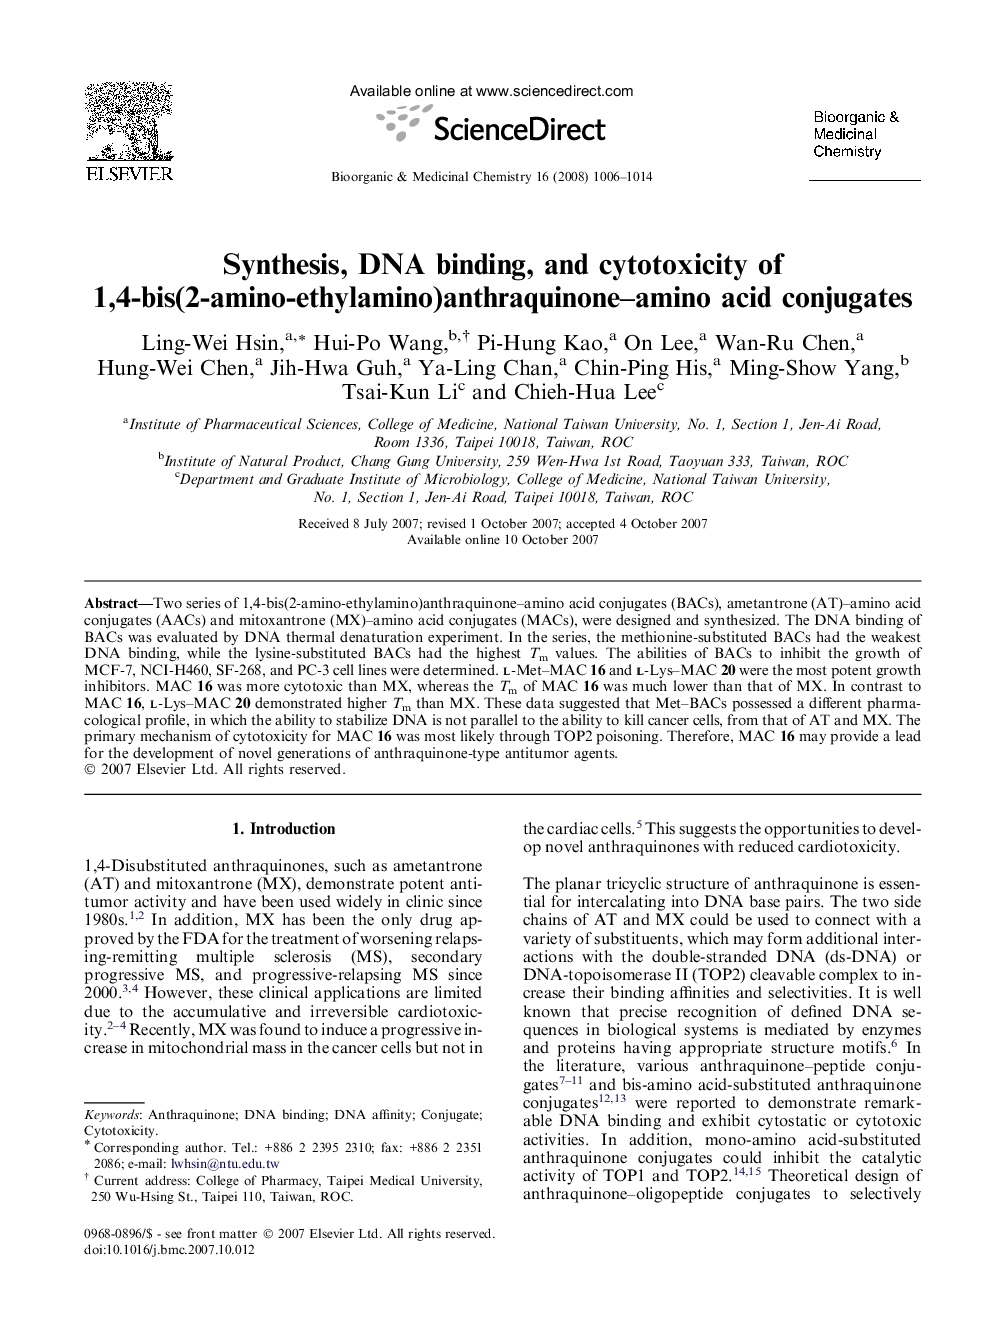 Synthesis, DNA binding, and cytotoxicity of 1,4-bis(2-amino-ethylamino)anthraquinone–amino acid conjugates